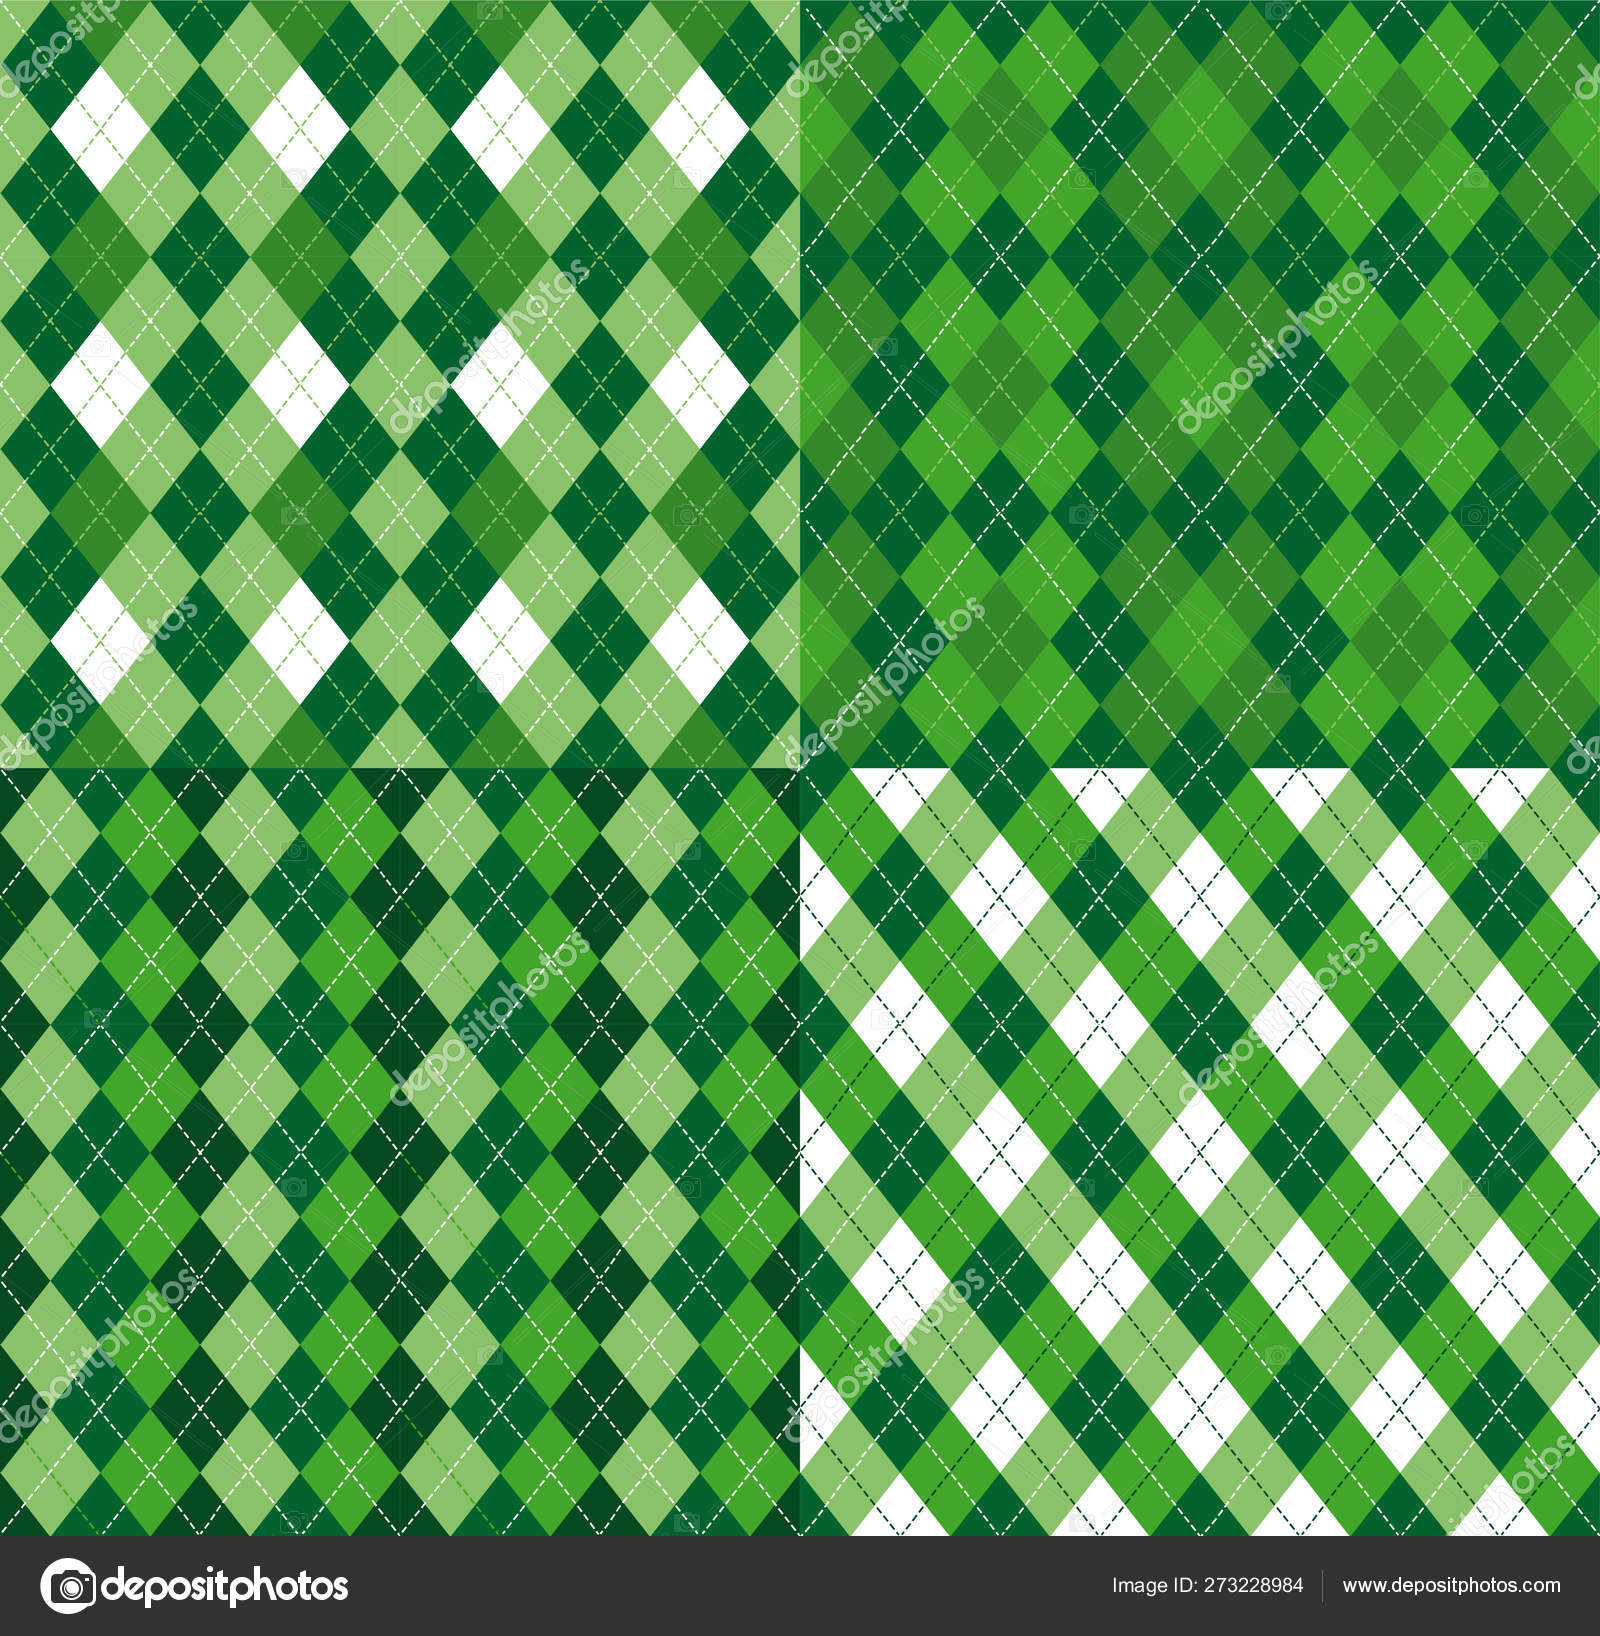 irish plaid patterns